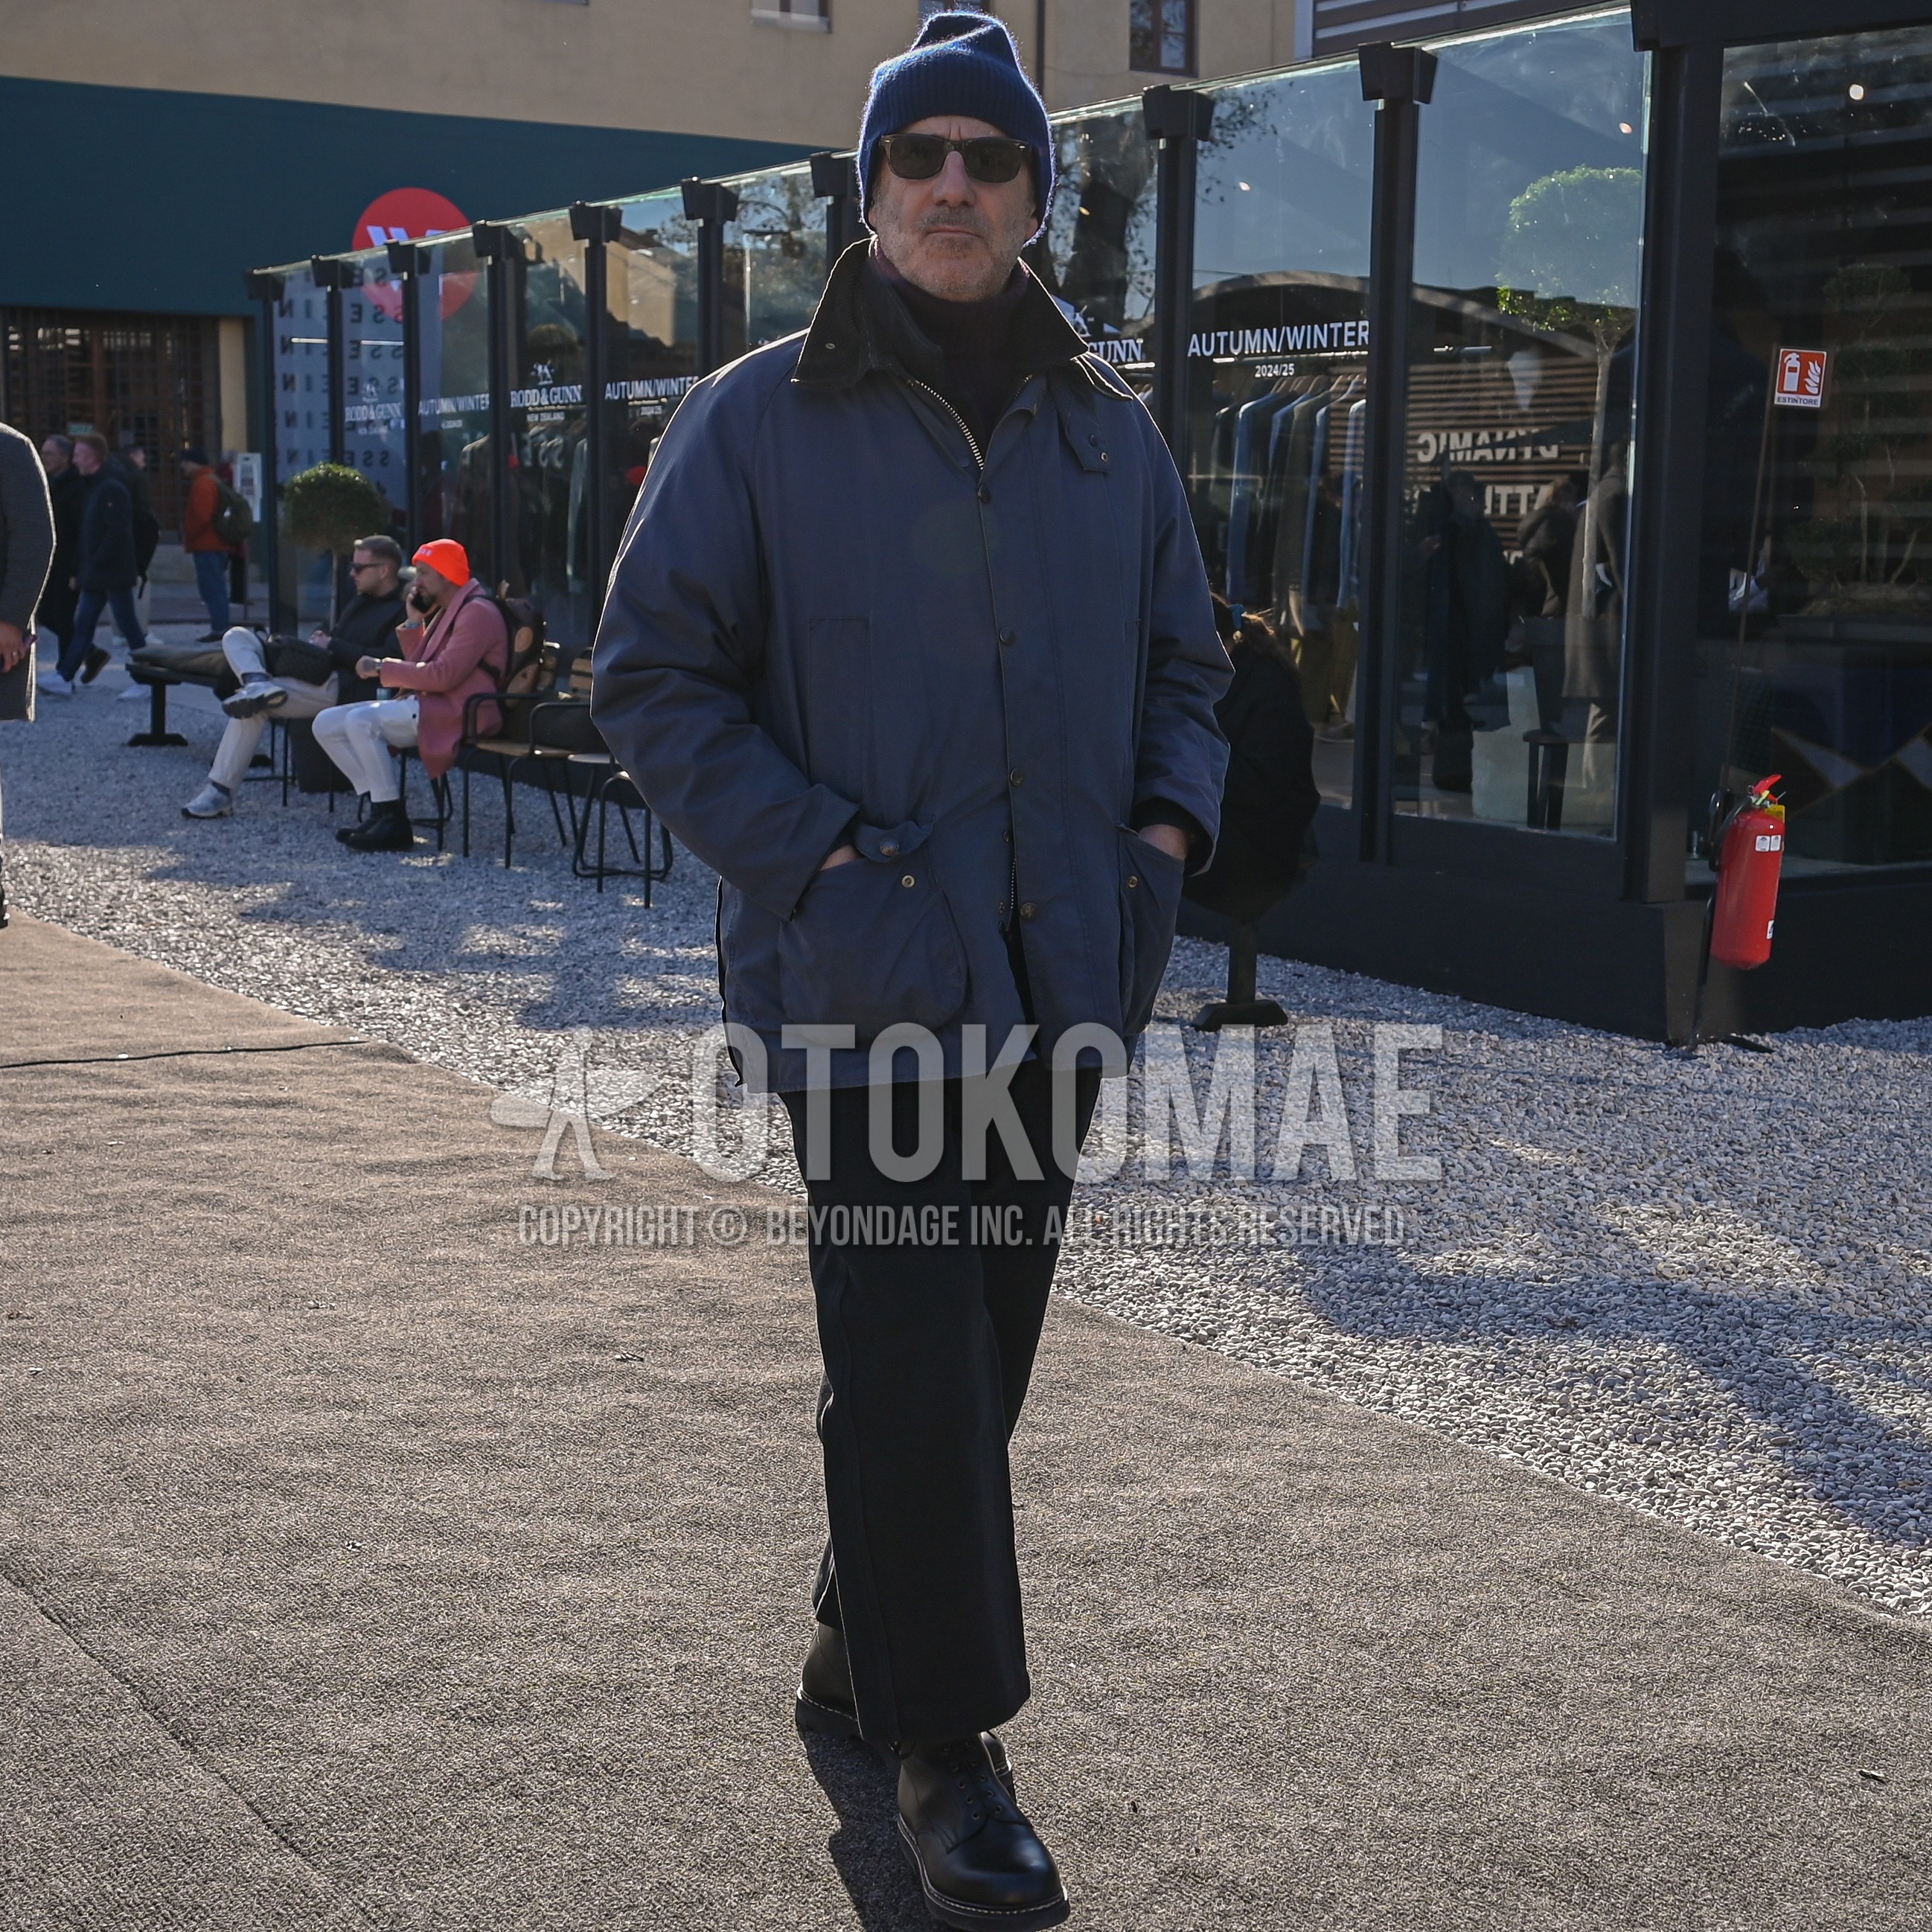 Men's autumn winter outfit with navy plain knit cap, dark gray plain sunglasses, navy outerwear field jacket/hunting jacket, black plain turtleneck knit, black plain slacks, black  boots.